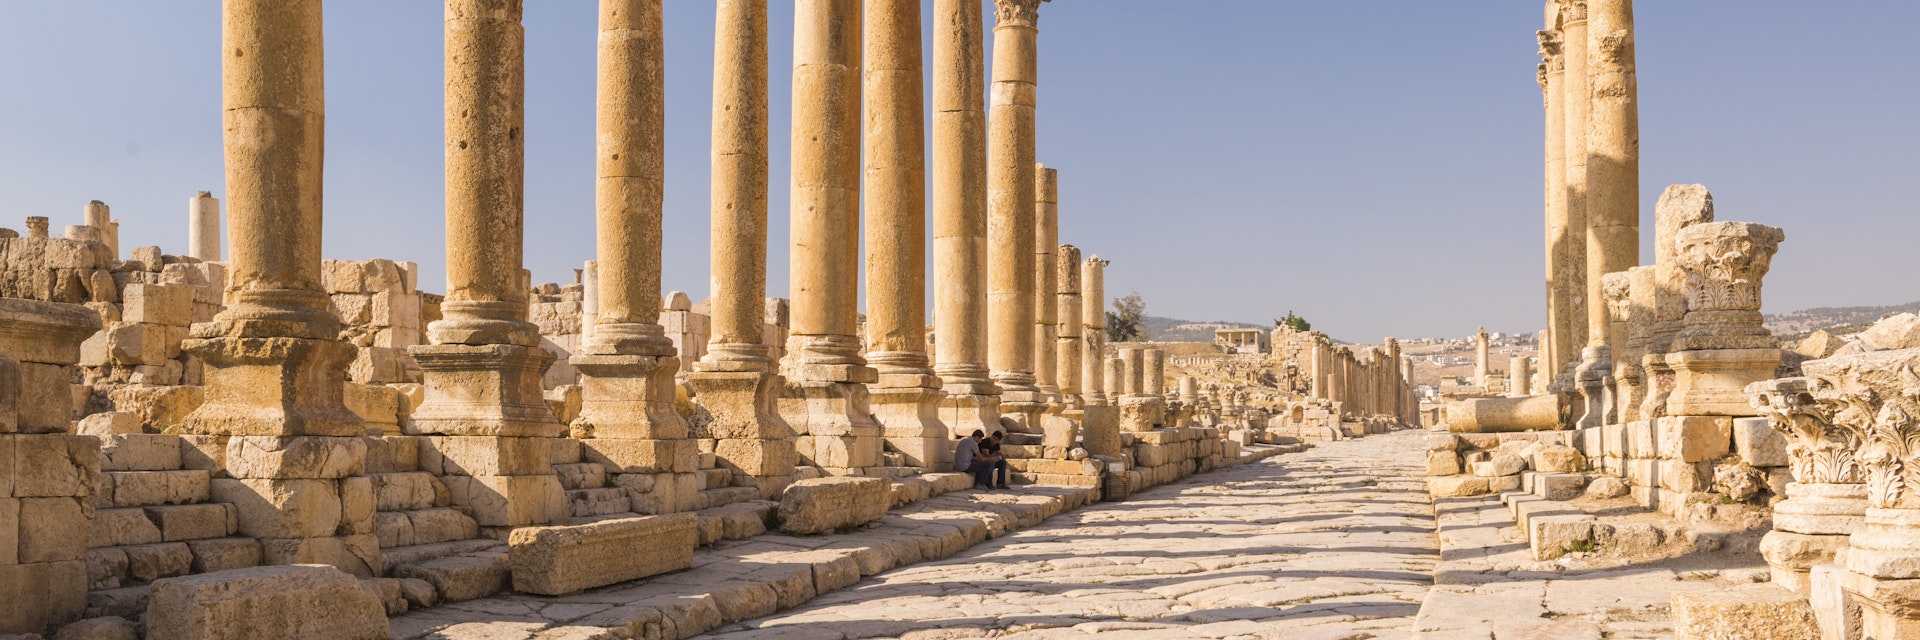 Jerash’s colonnaded Cardo Maximus.